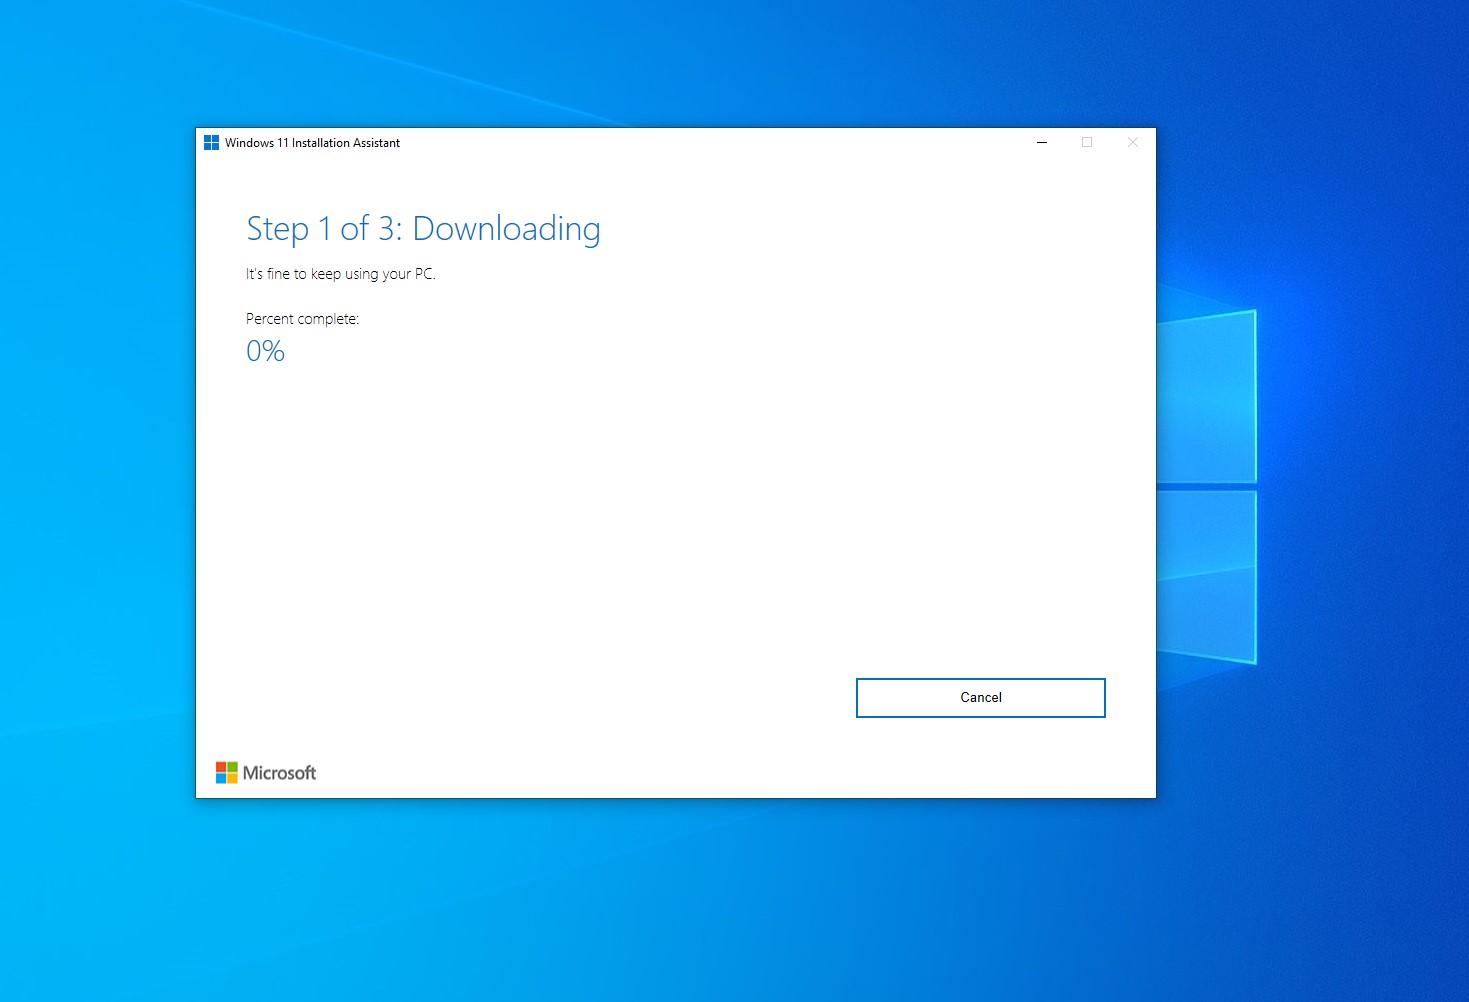 Step 1 of installing Windows 11.